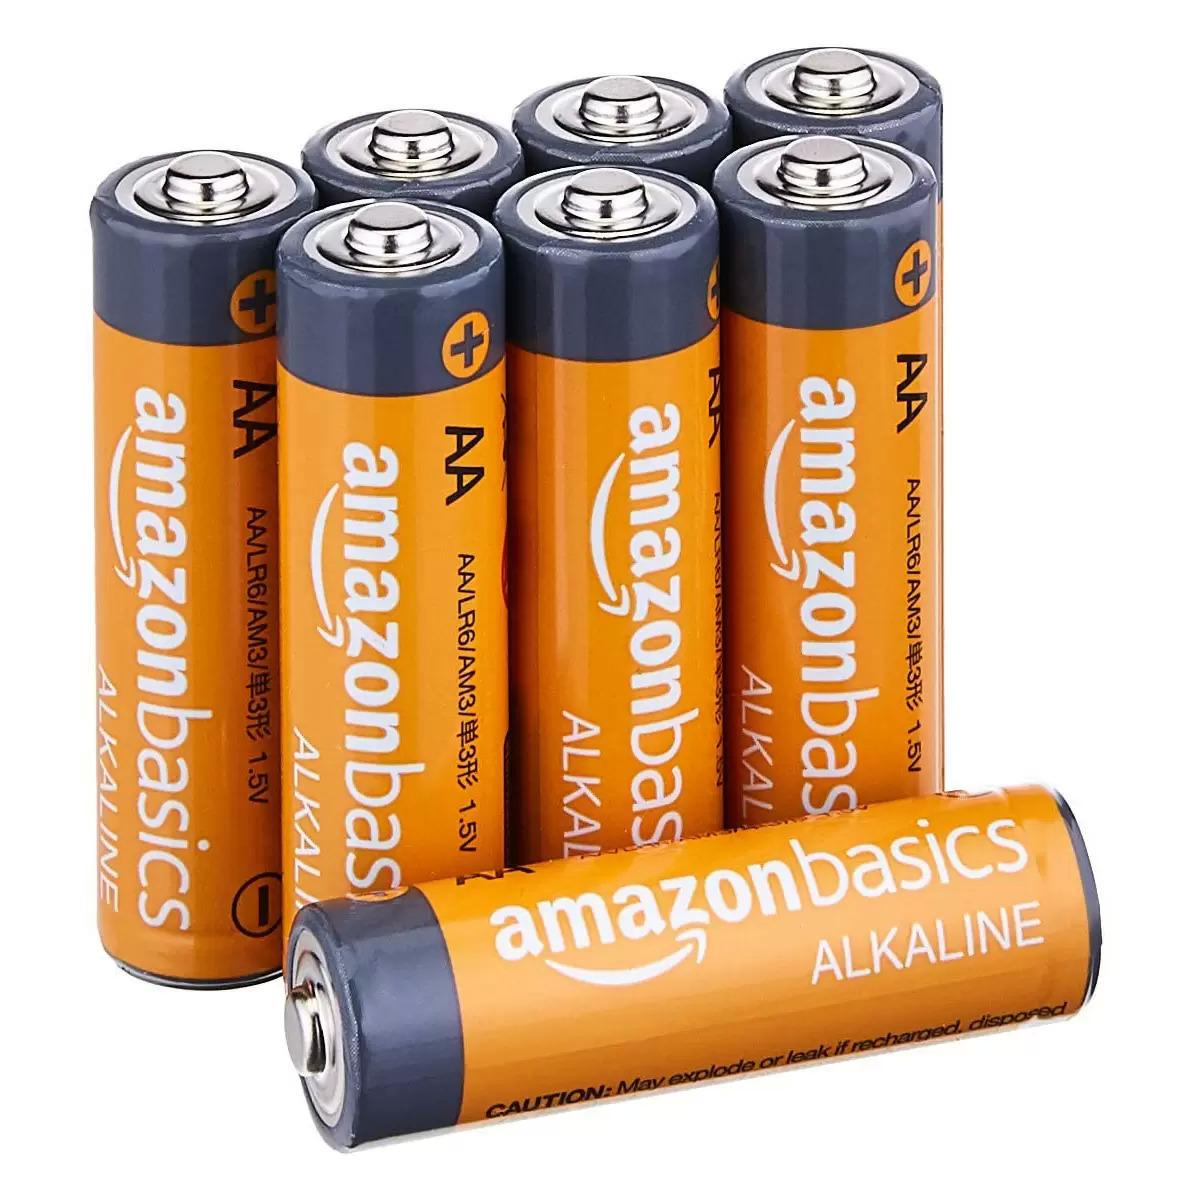 8 AmazonBasics AA Alkaline Batteries for $3.68 Shipped